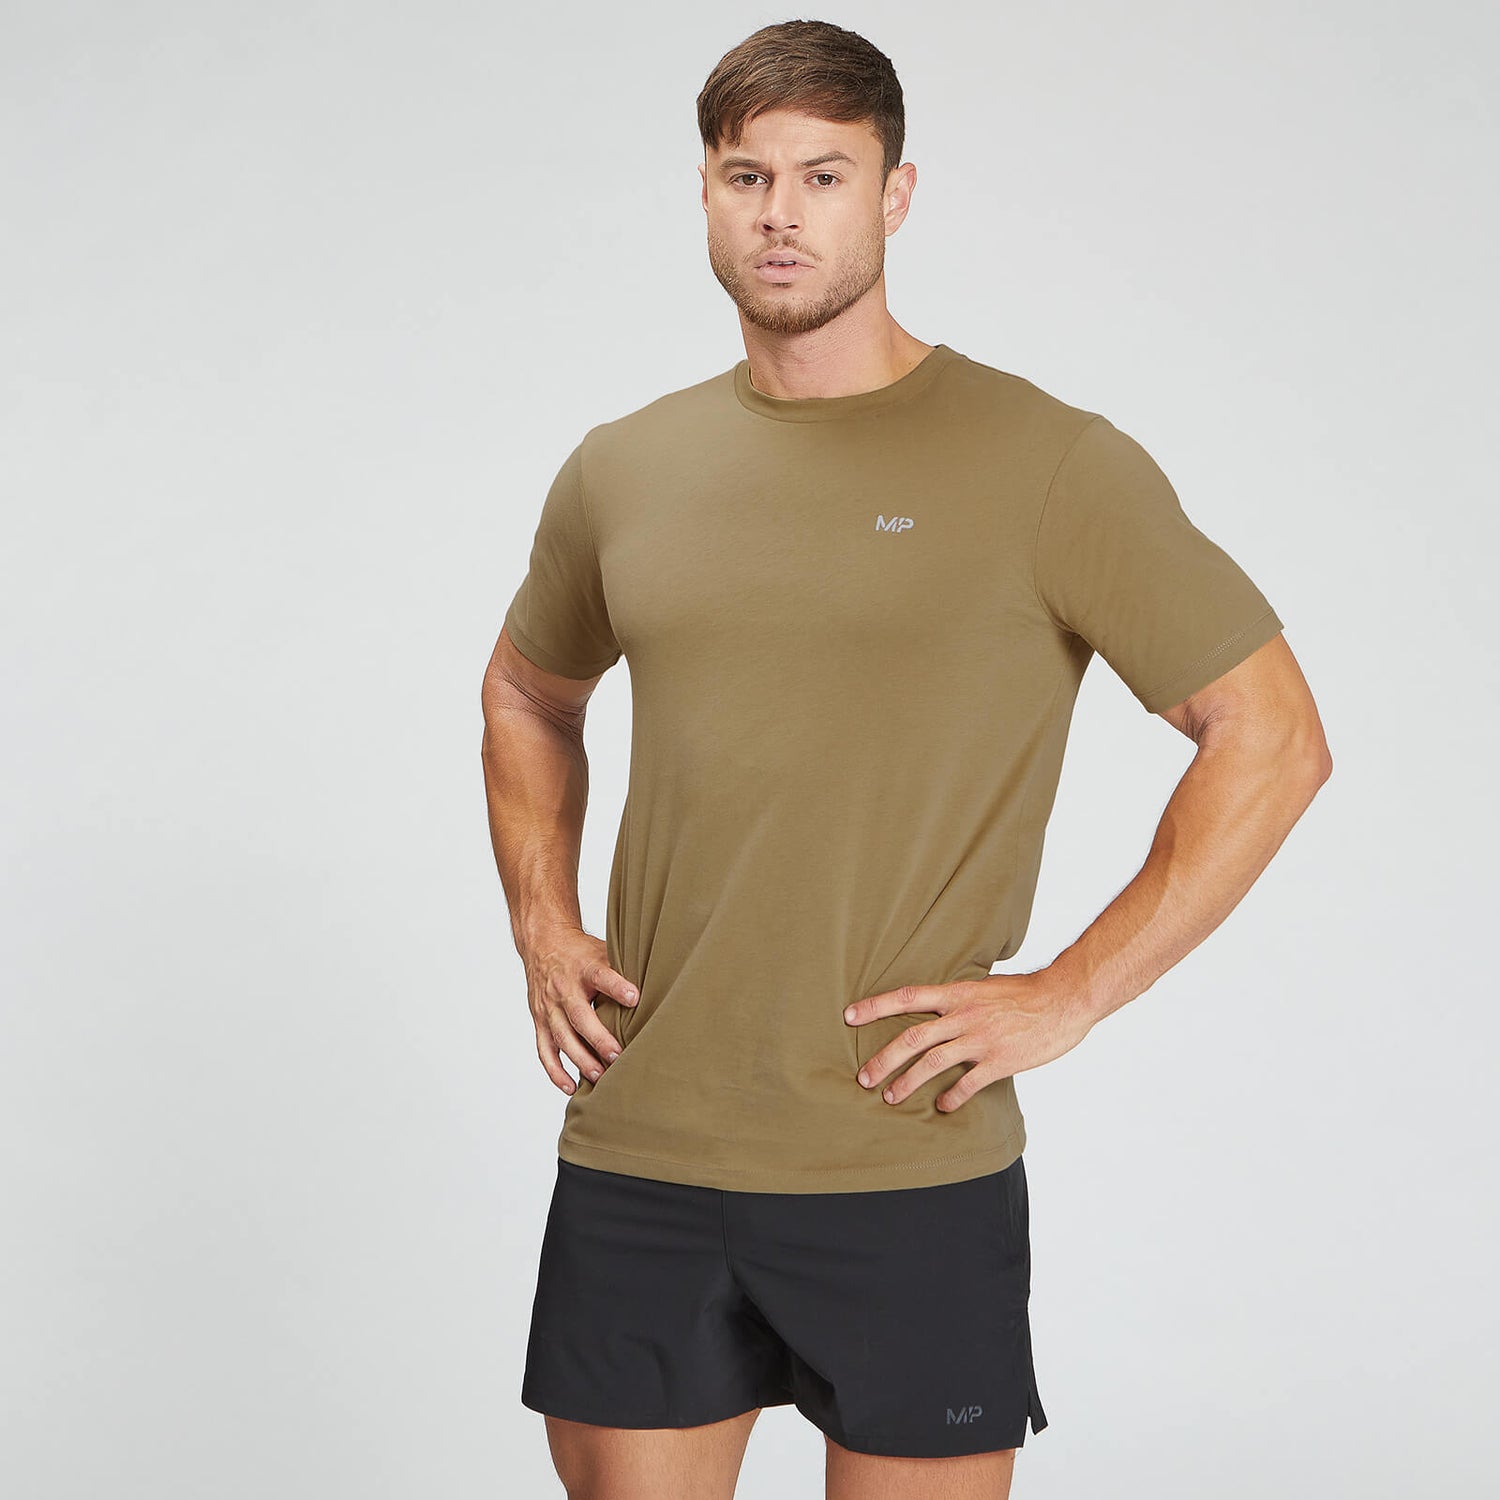 MP Men's Essentials T-Shirt - Dark Tan - XS